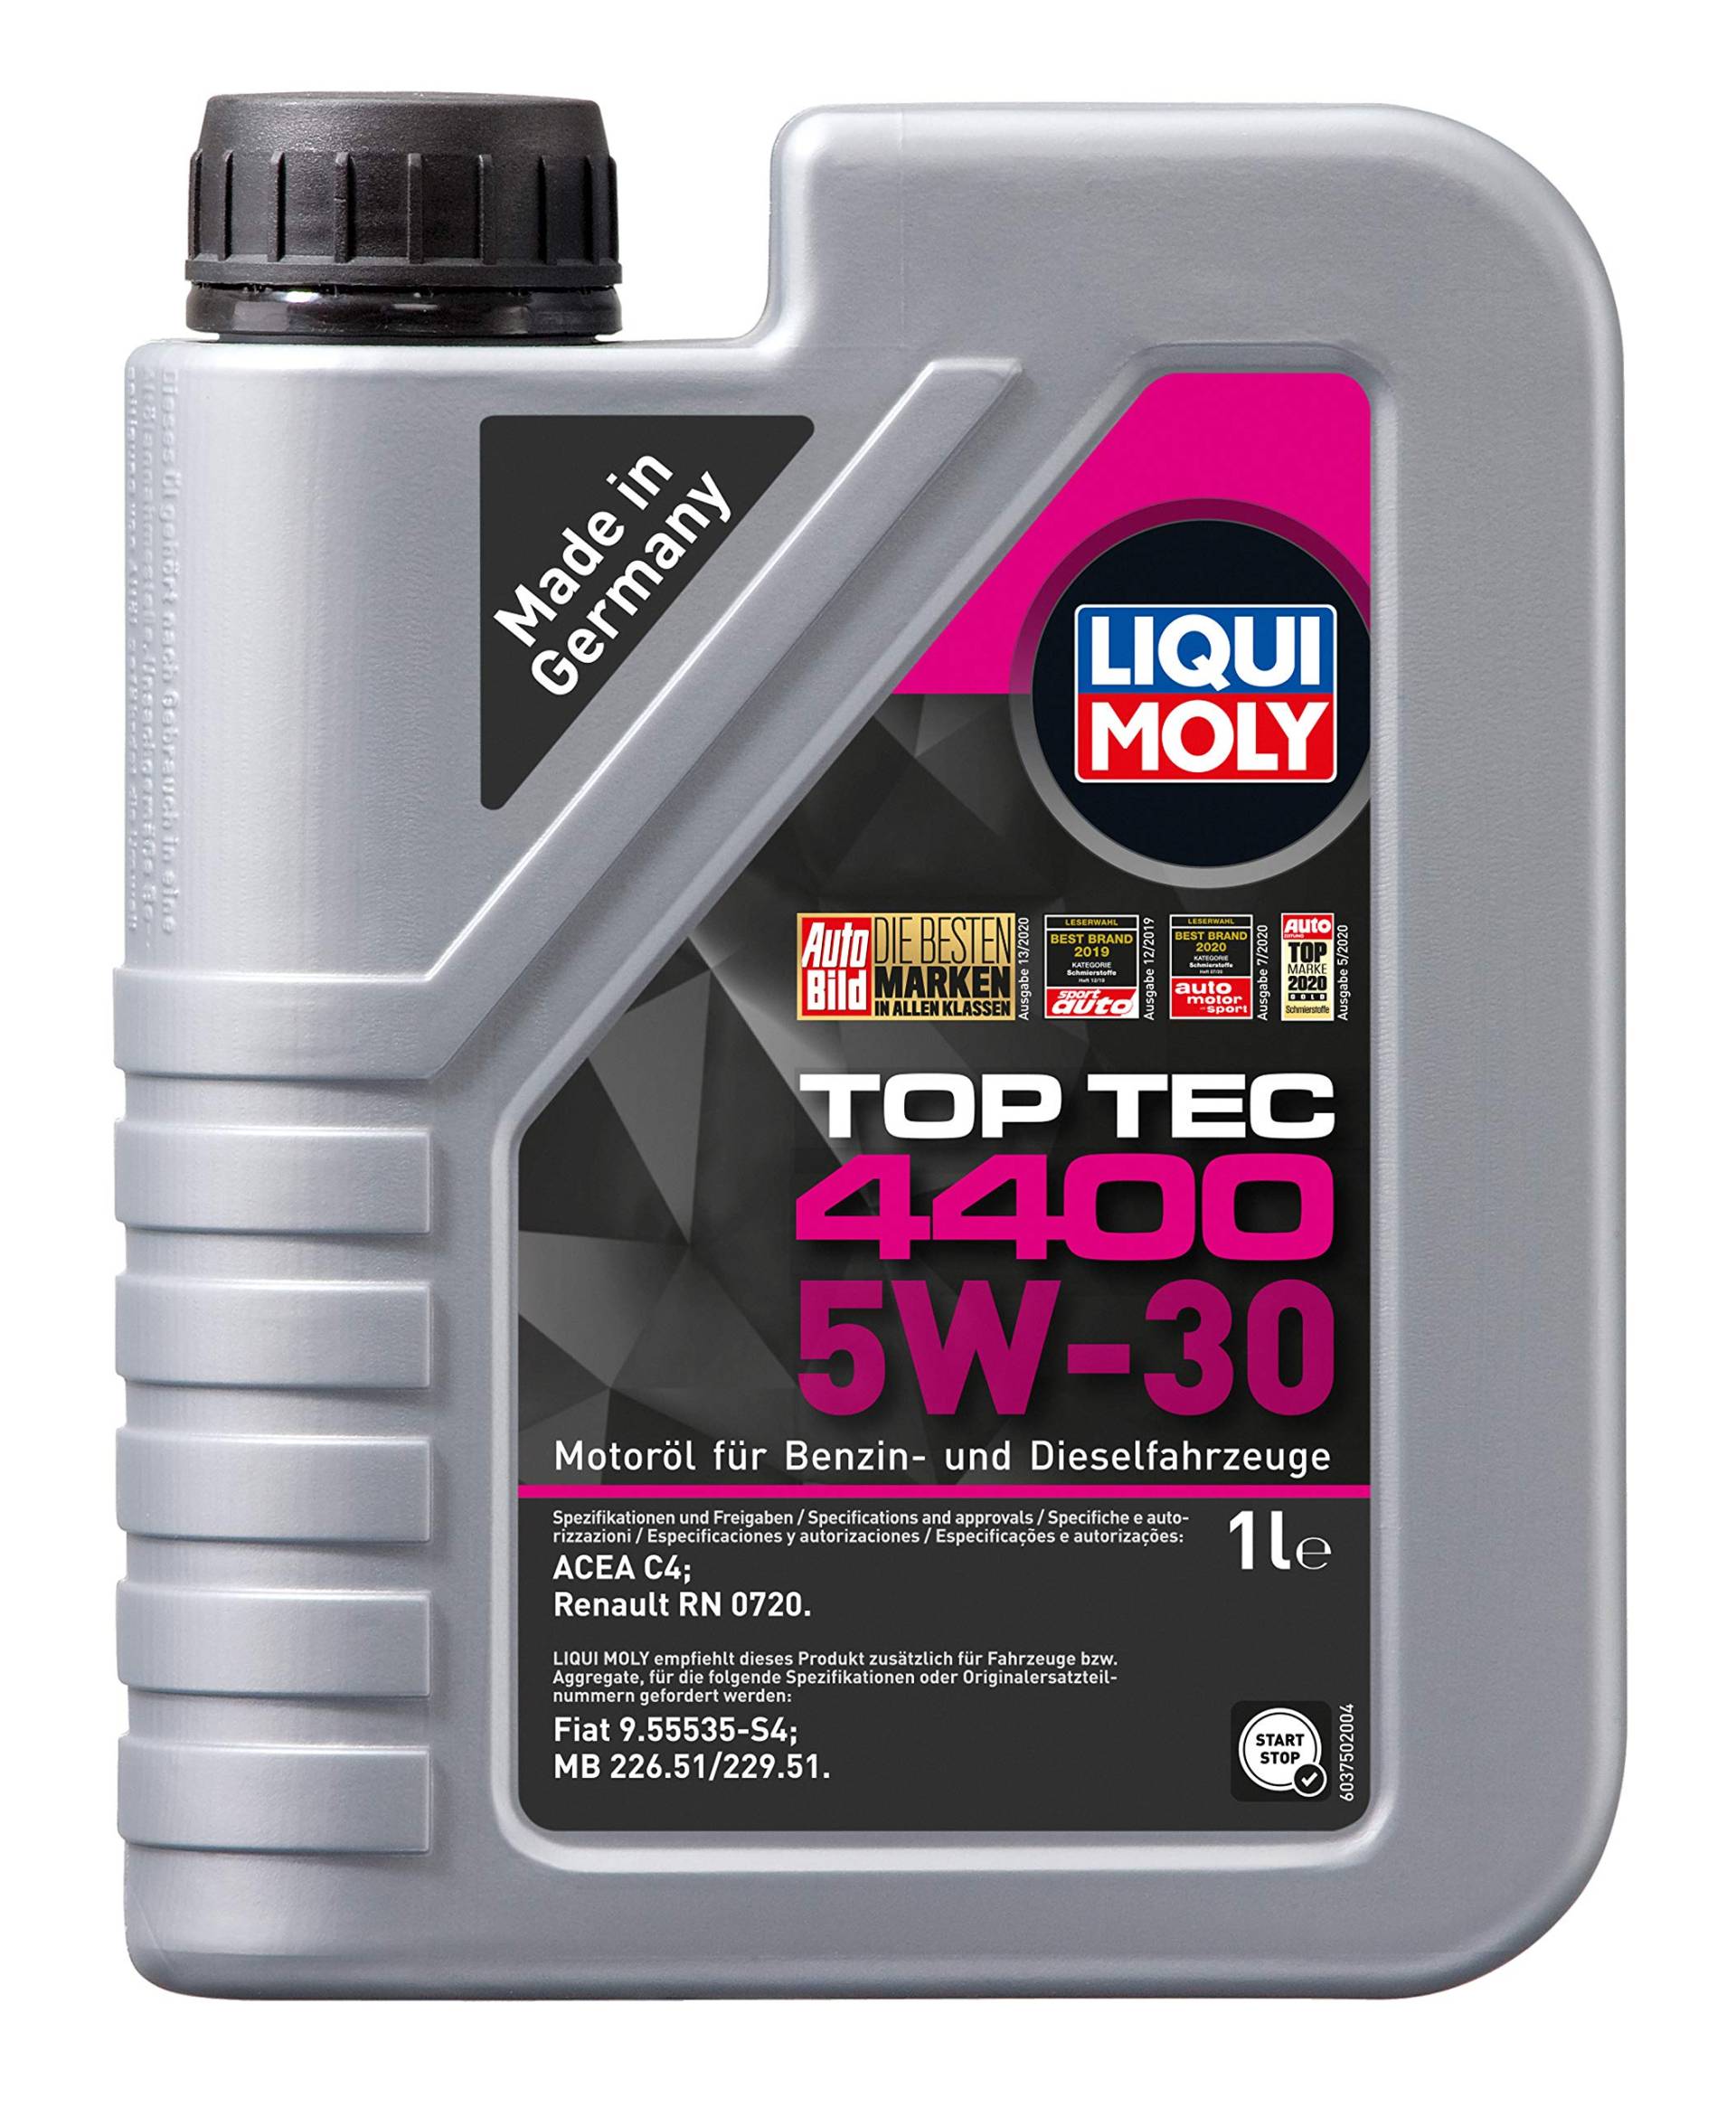 LIQUI MOLY 2319 Toptech Motoröl HC 4400 5w30 1L von Liqui Moly